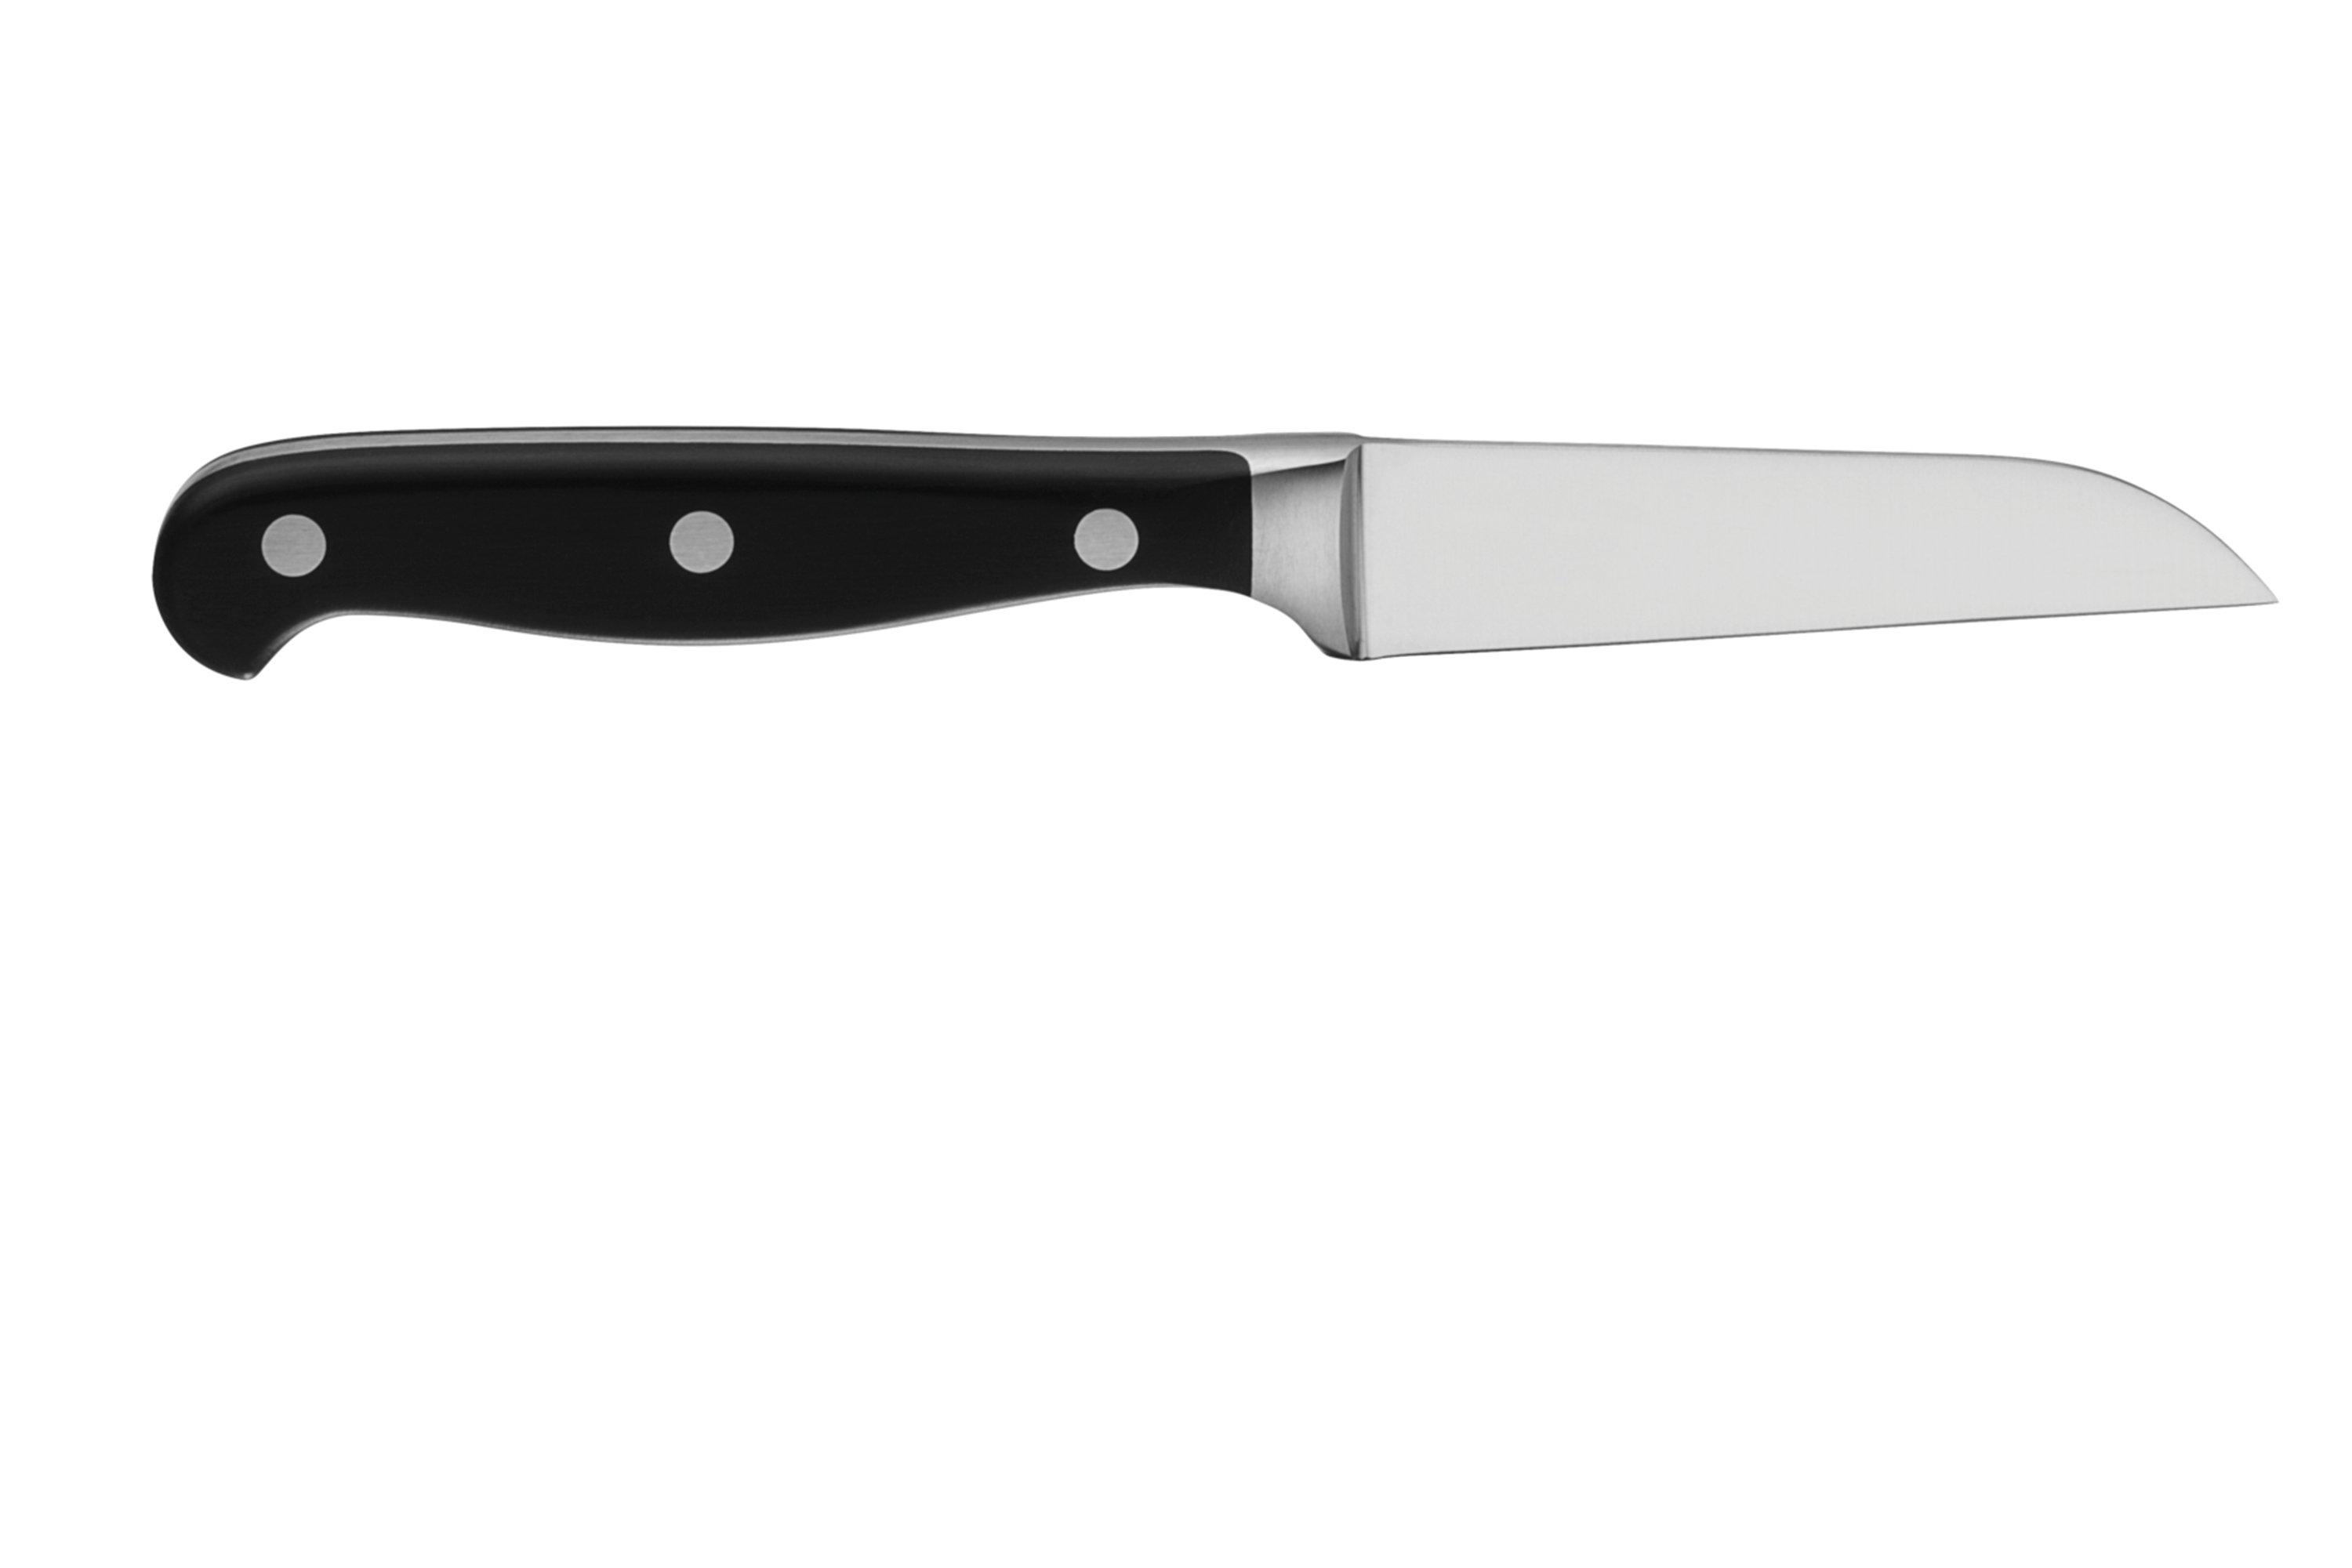 Plus 1894919992, WMF 3-piece Advantageously set at | Spitzenklasse shopping knife